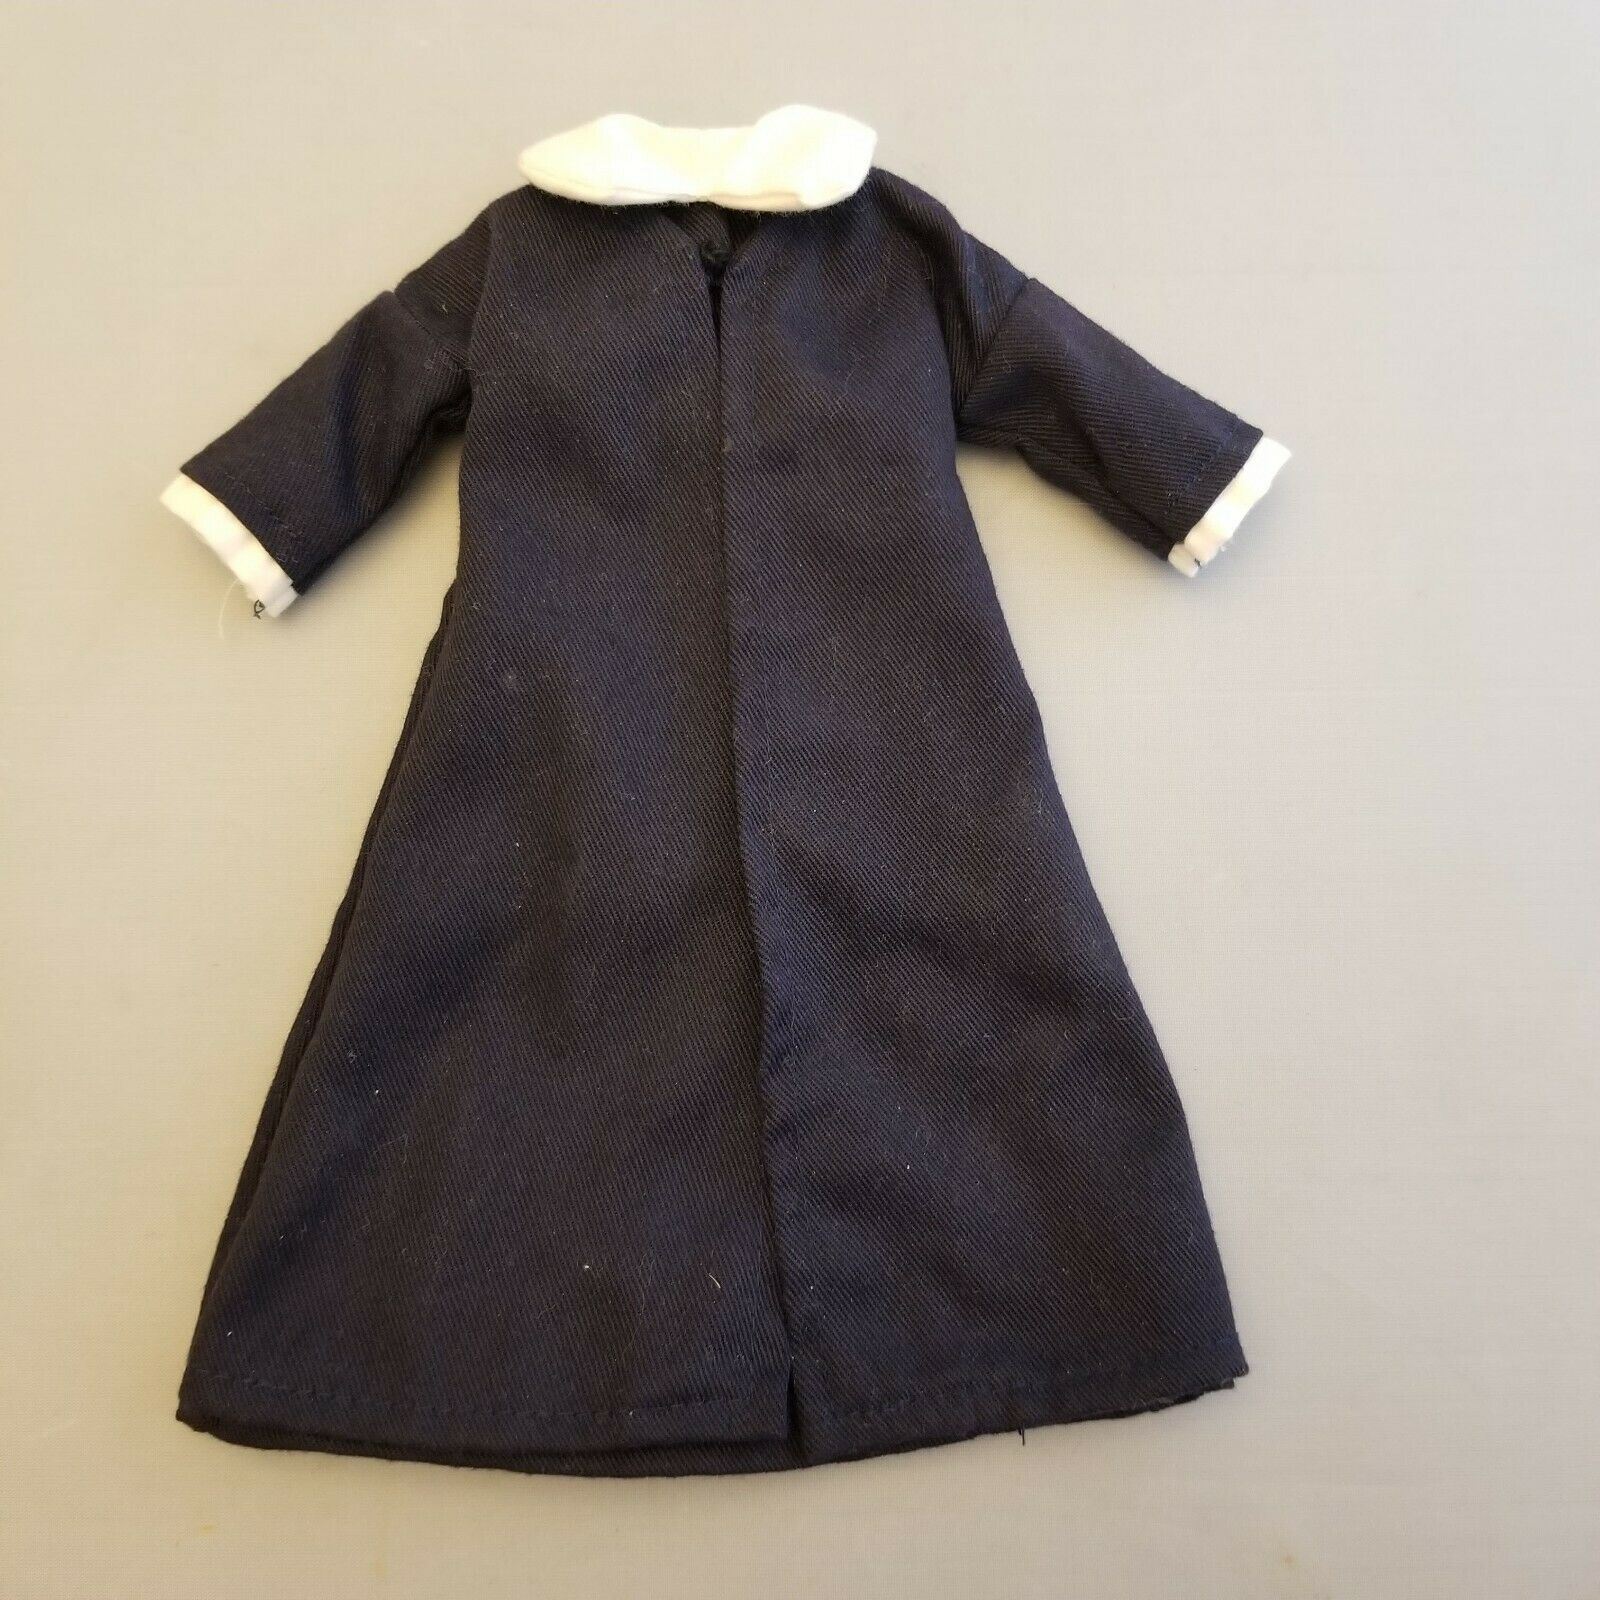 Eden Madeline Miss Clavel Nun Dress Navy Blue Habit Only